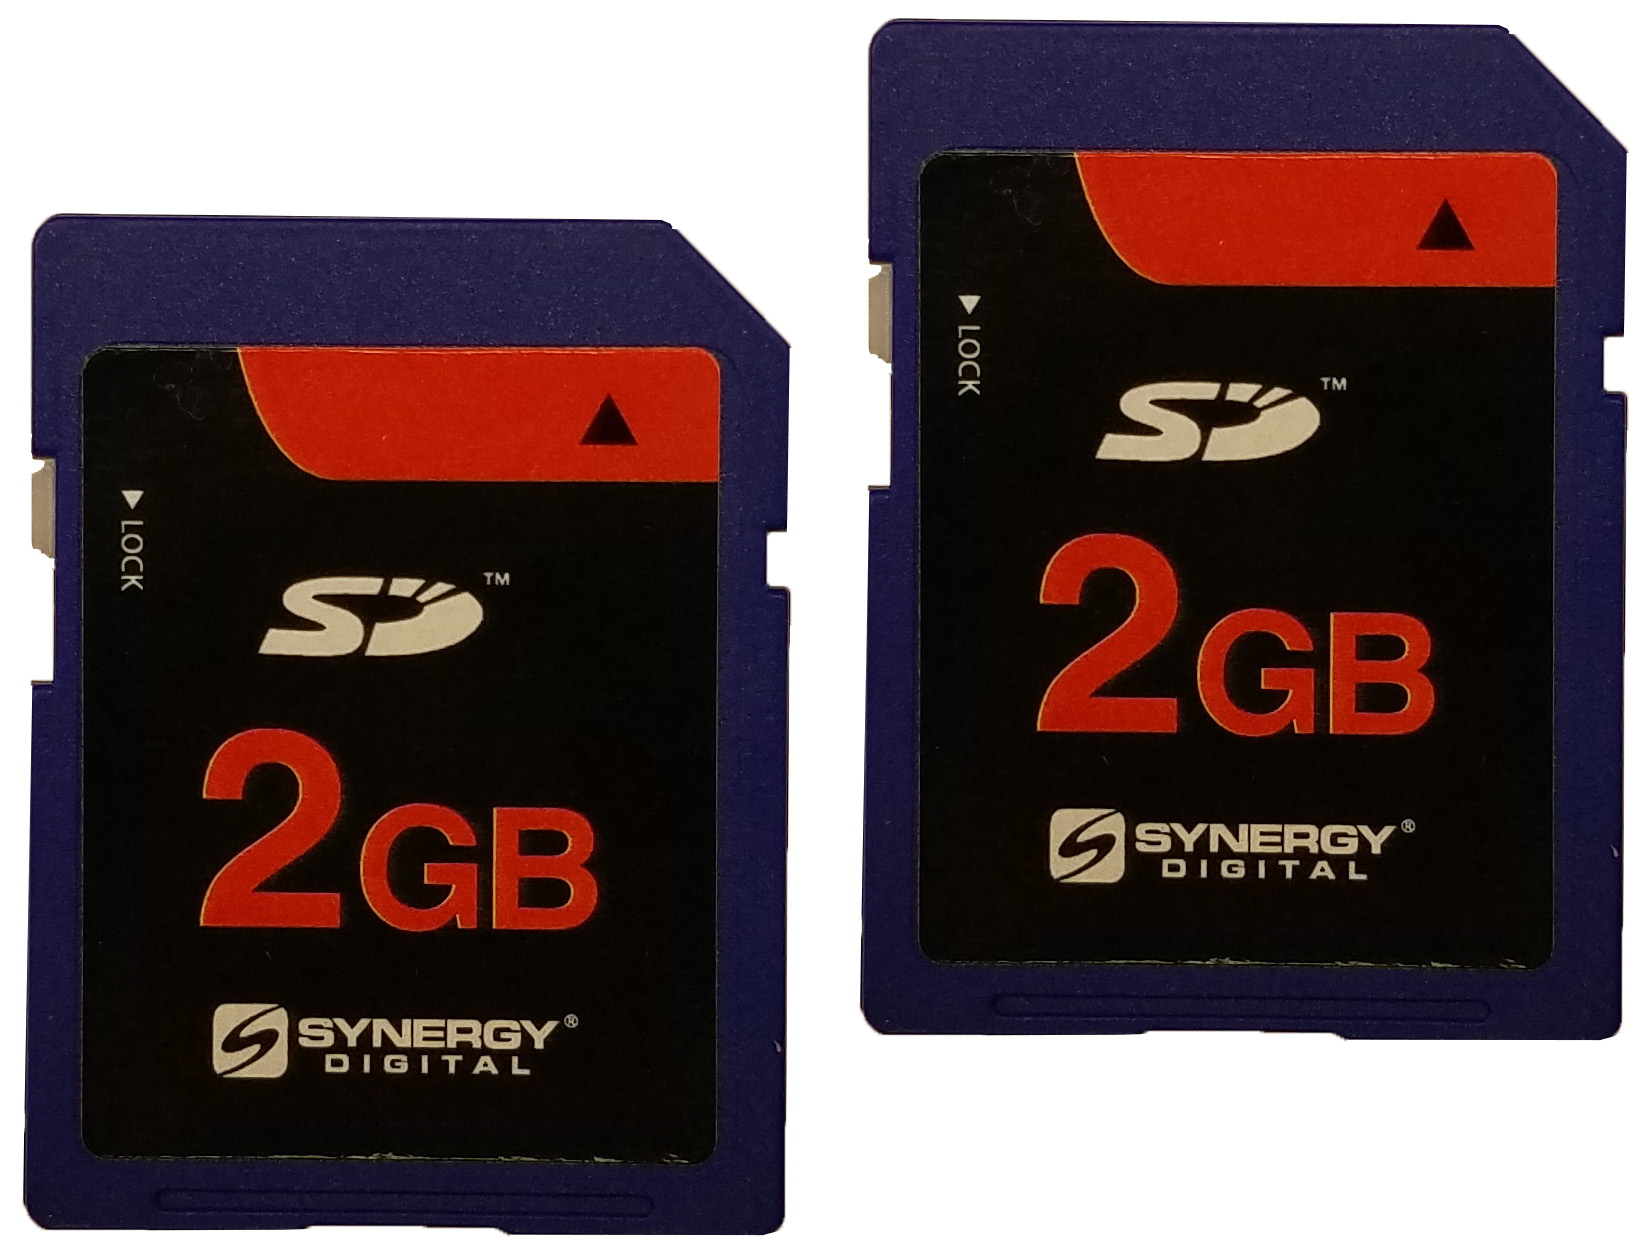 Memory Cards for Kodak DX6490 Digital Camera